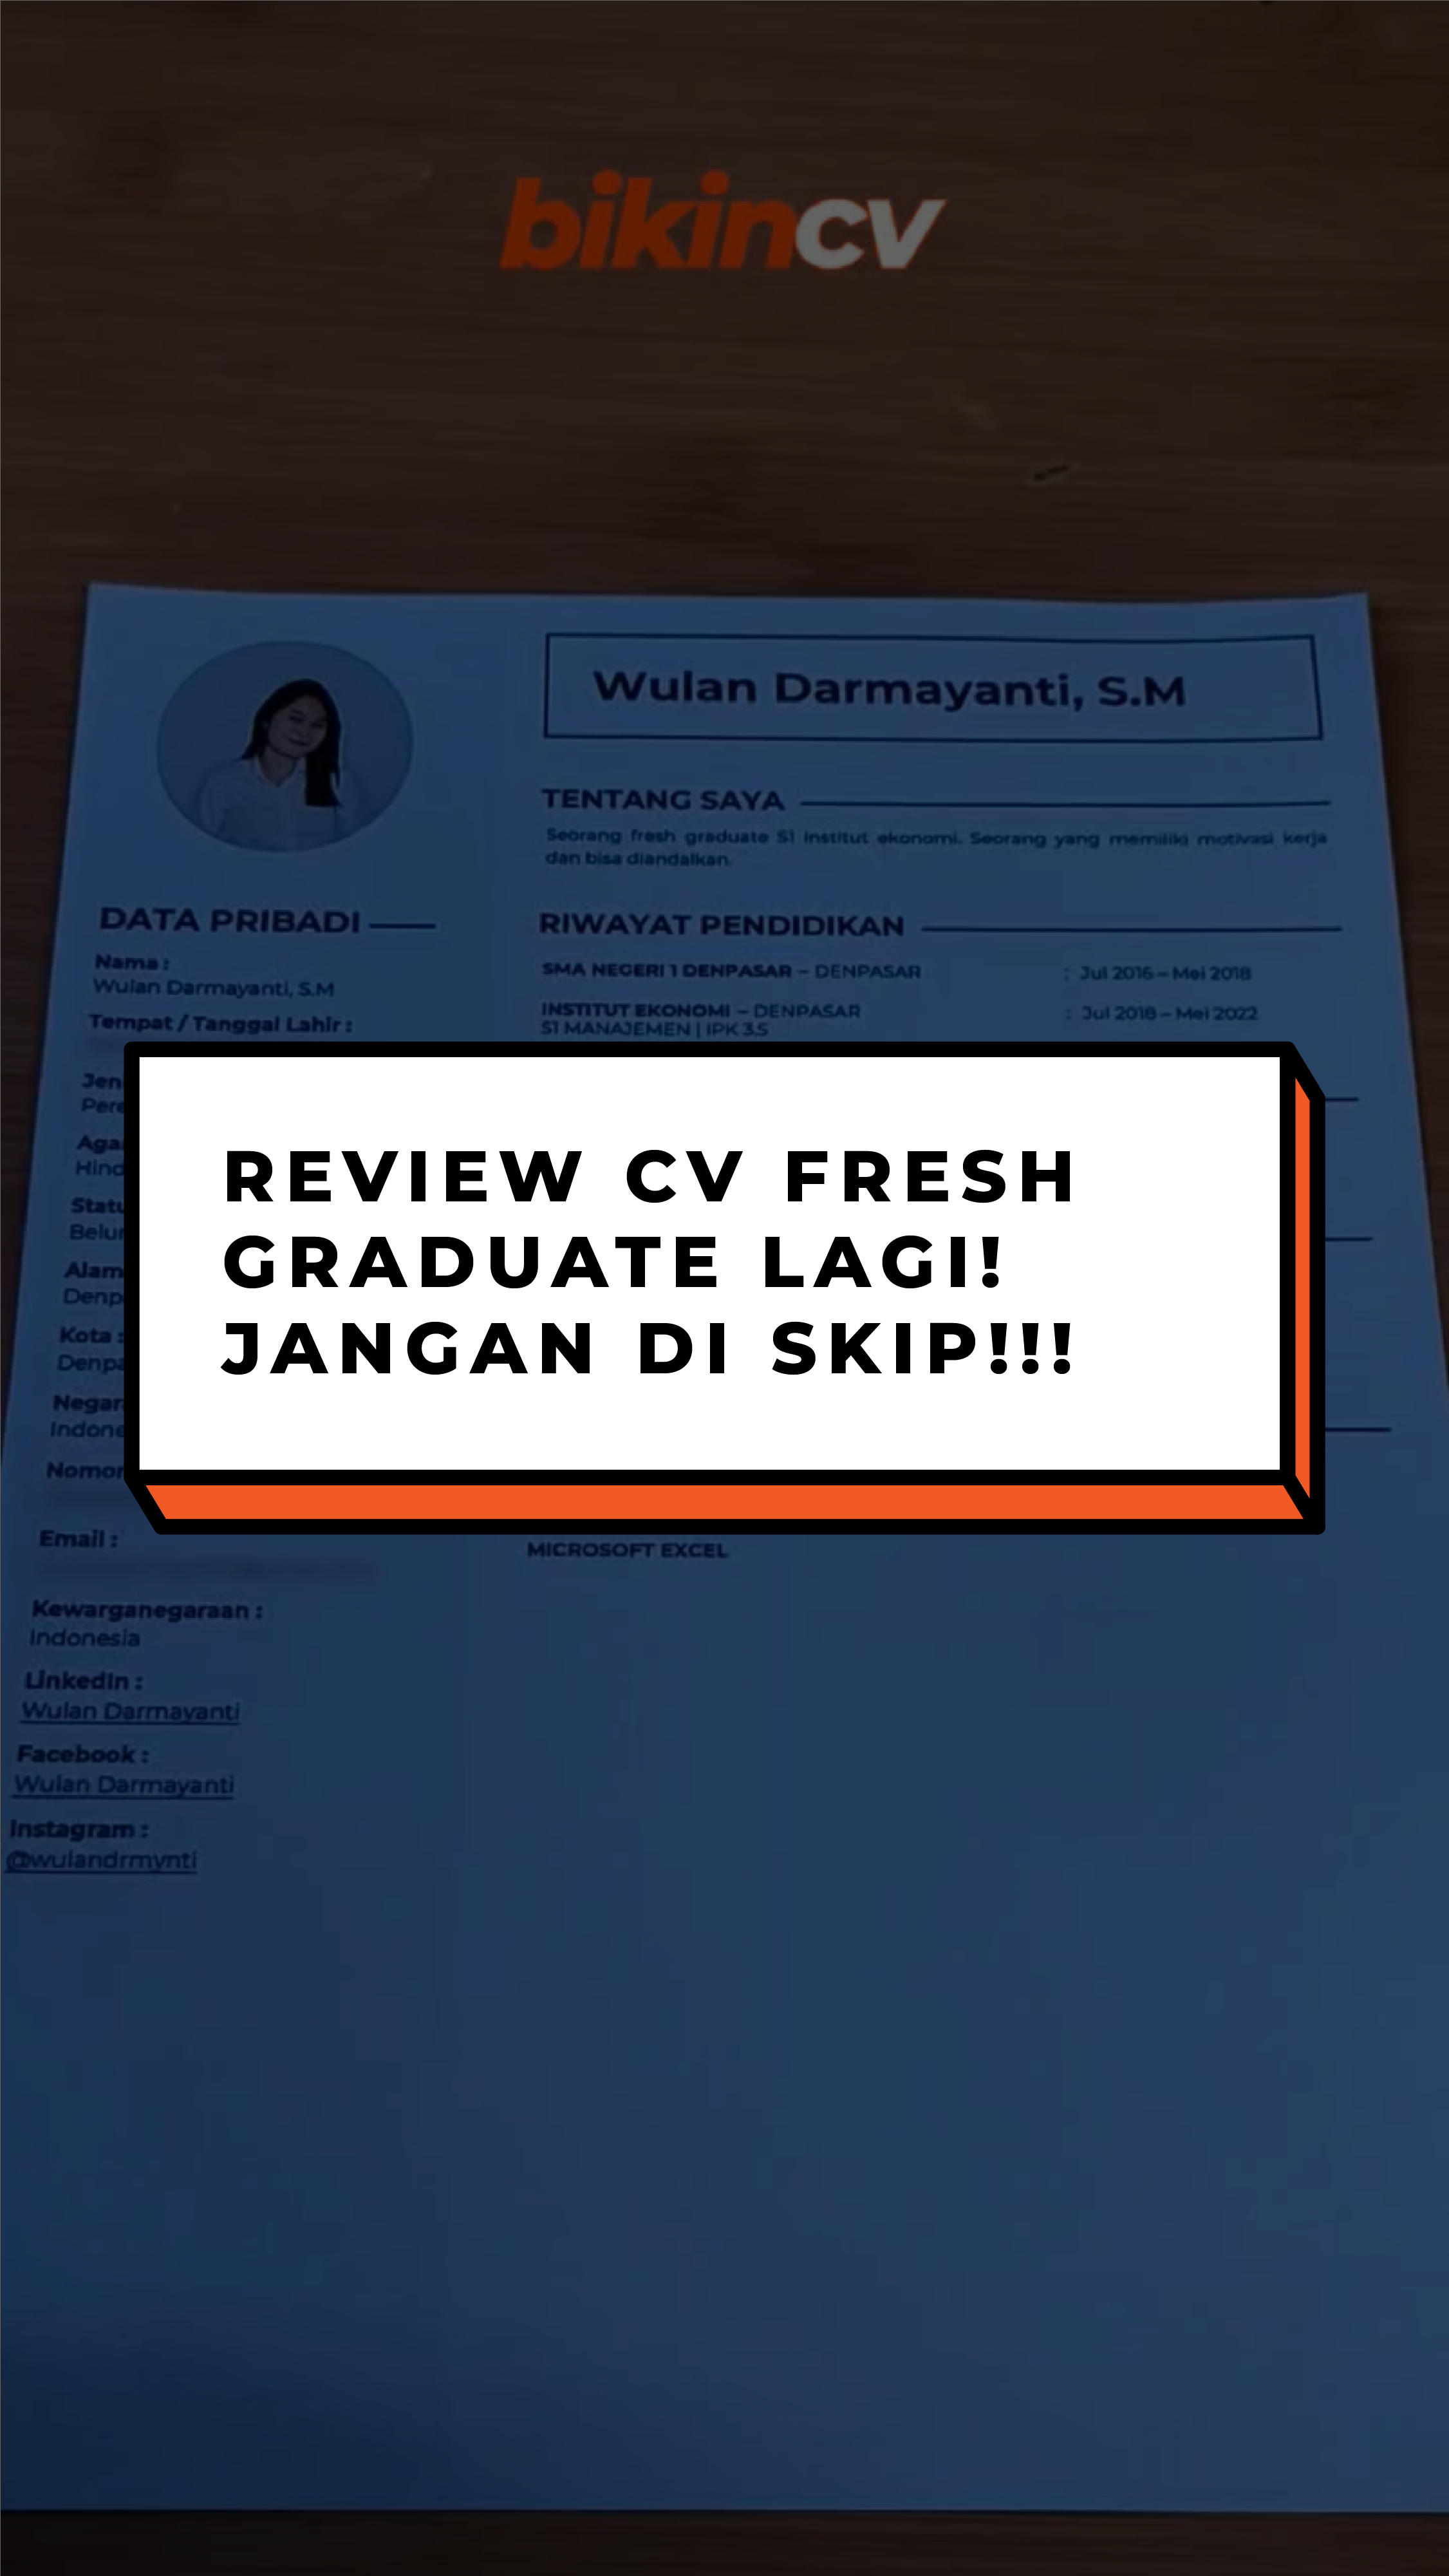 Review CV Fresh Graduate Lagi!